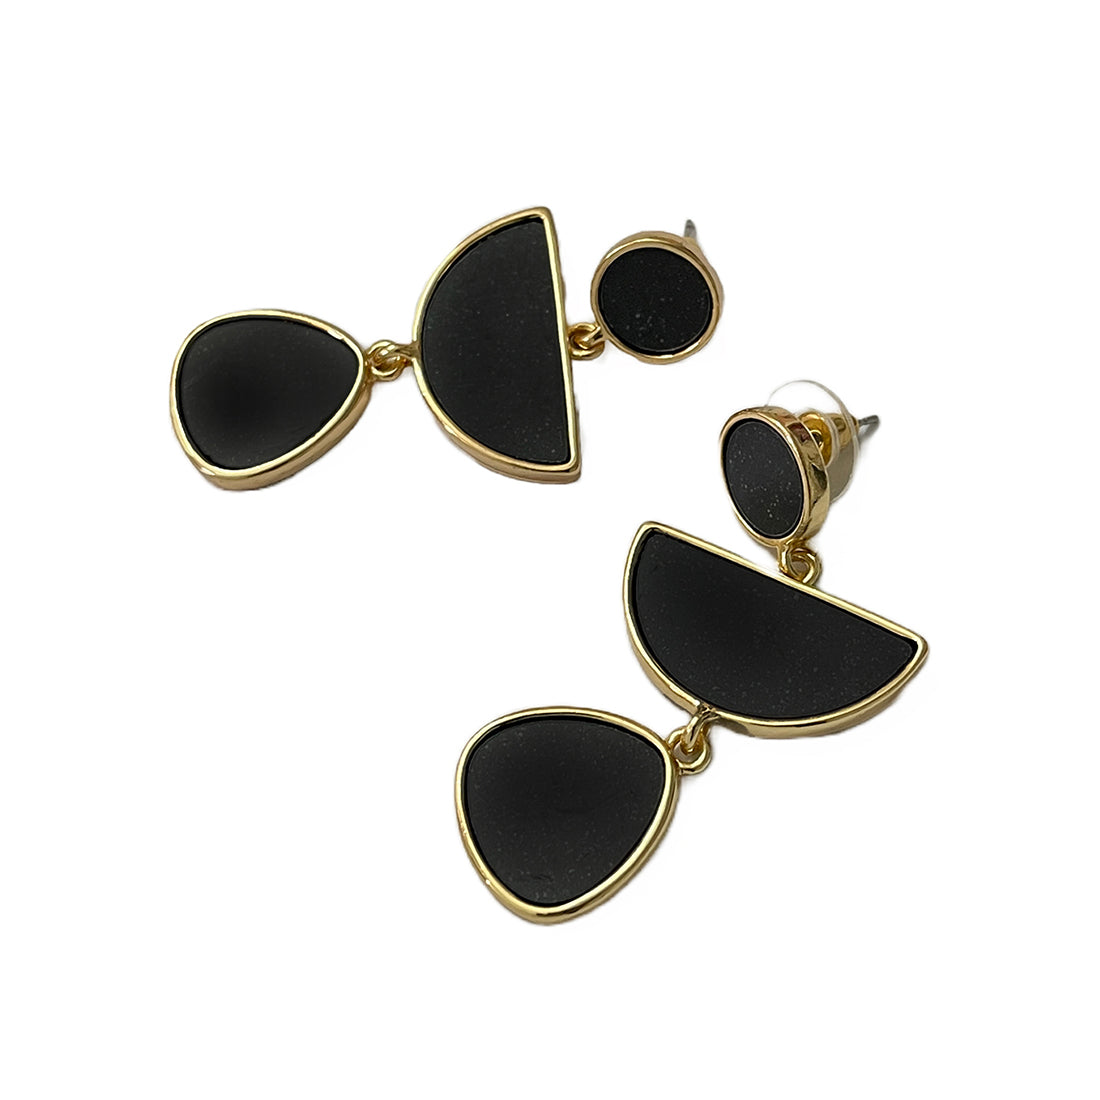 Organic Black Acrylic Gold-Toned Triple Drop Earrings